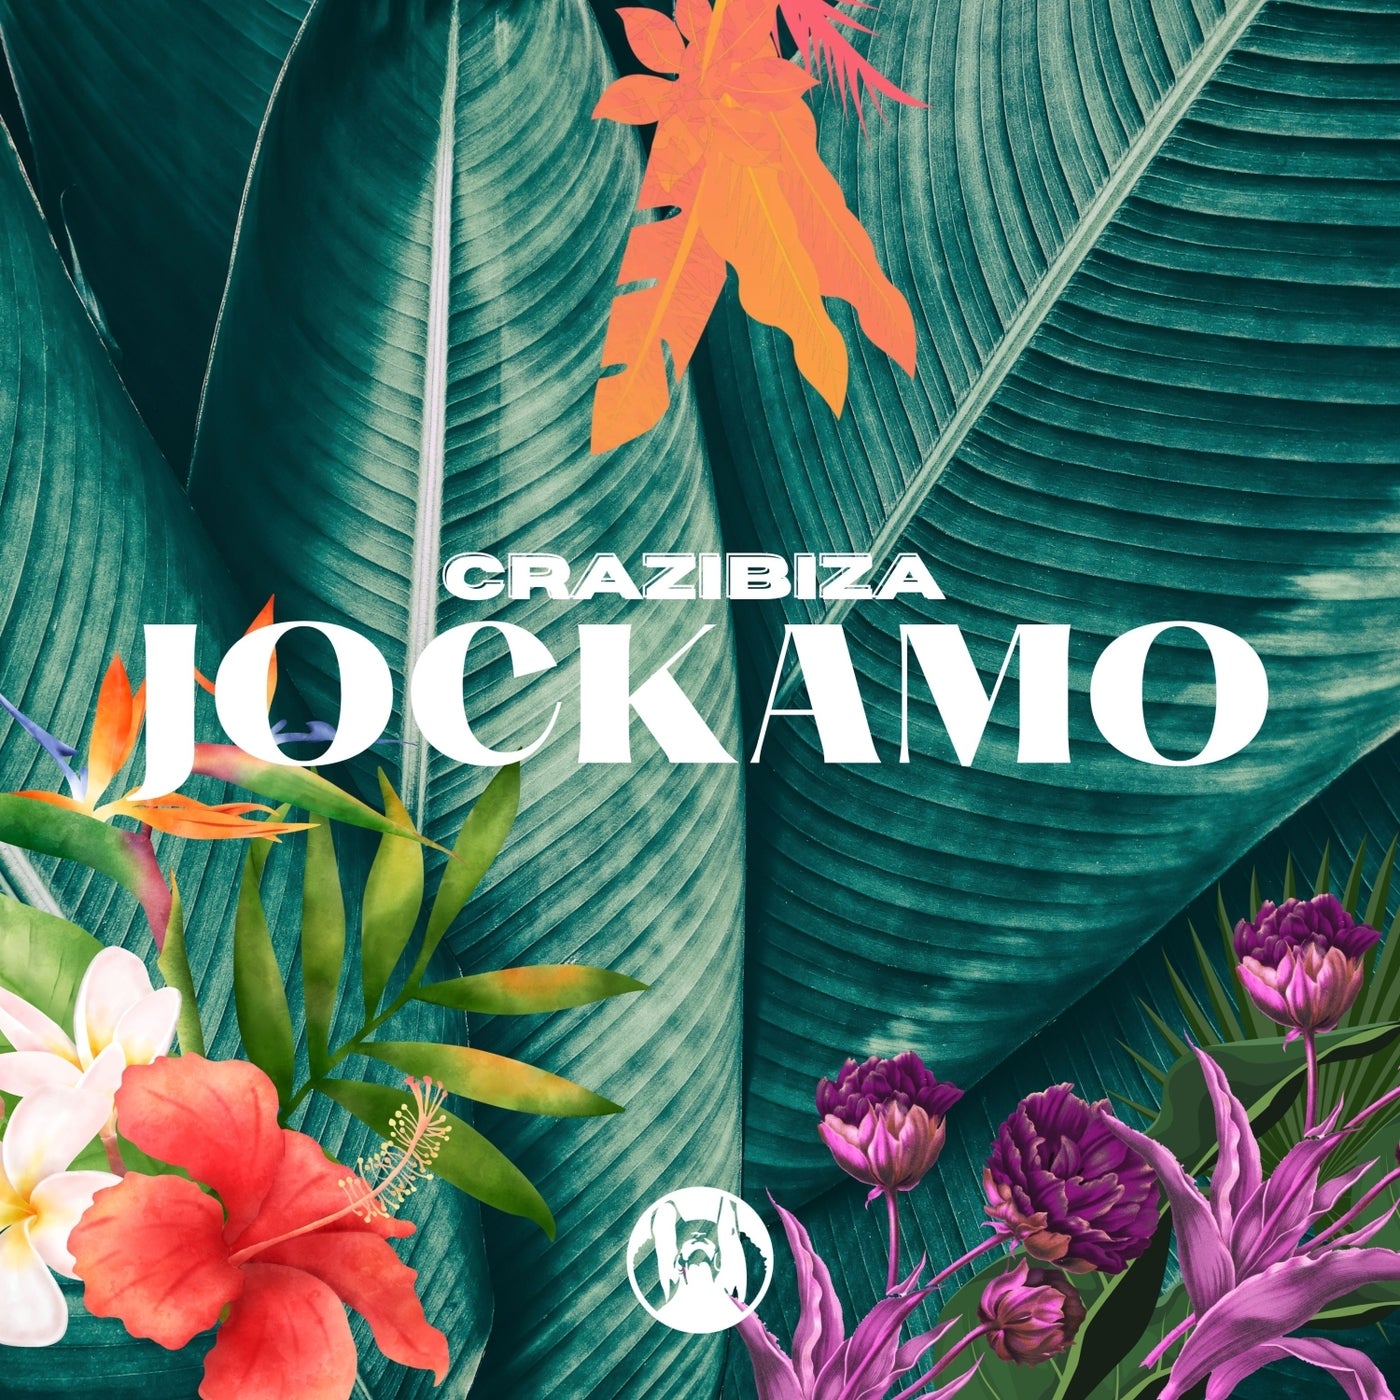 Crazibiza - Jockamo (Original Mix) [PornoStar Records] | Music ...